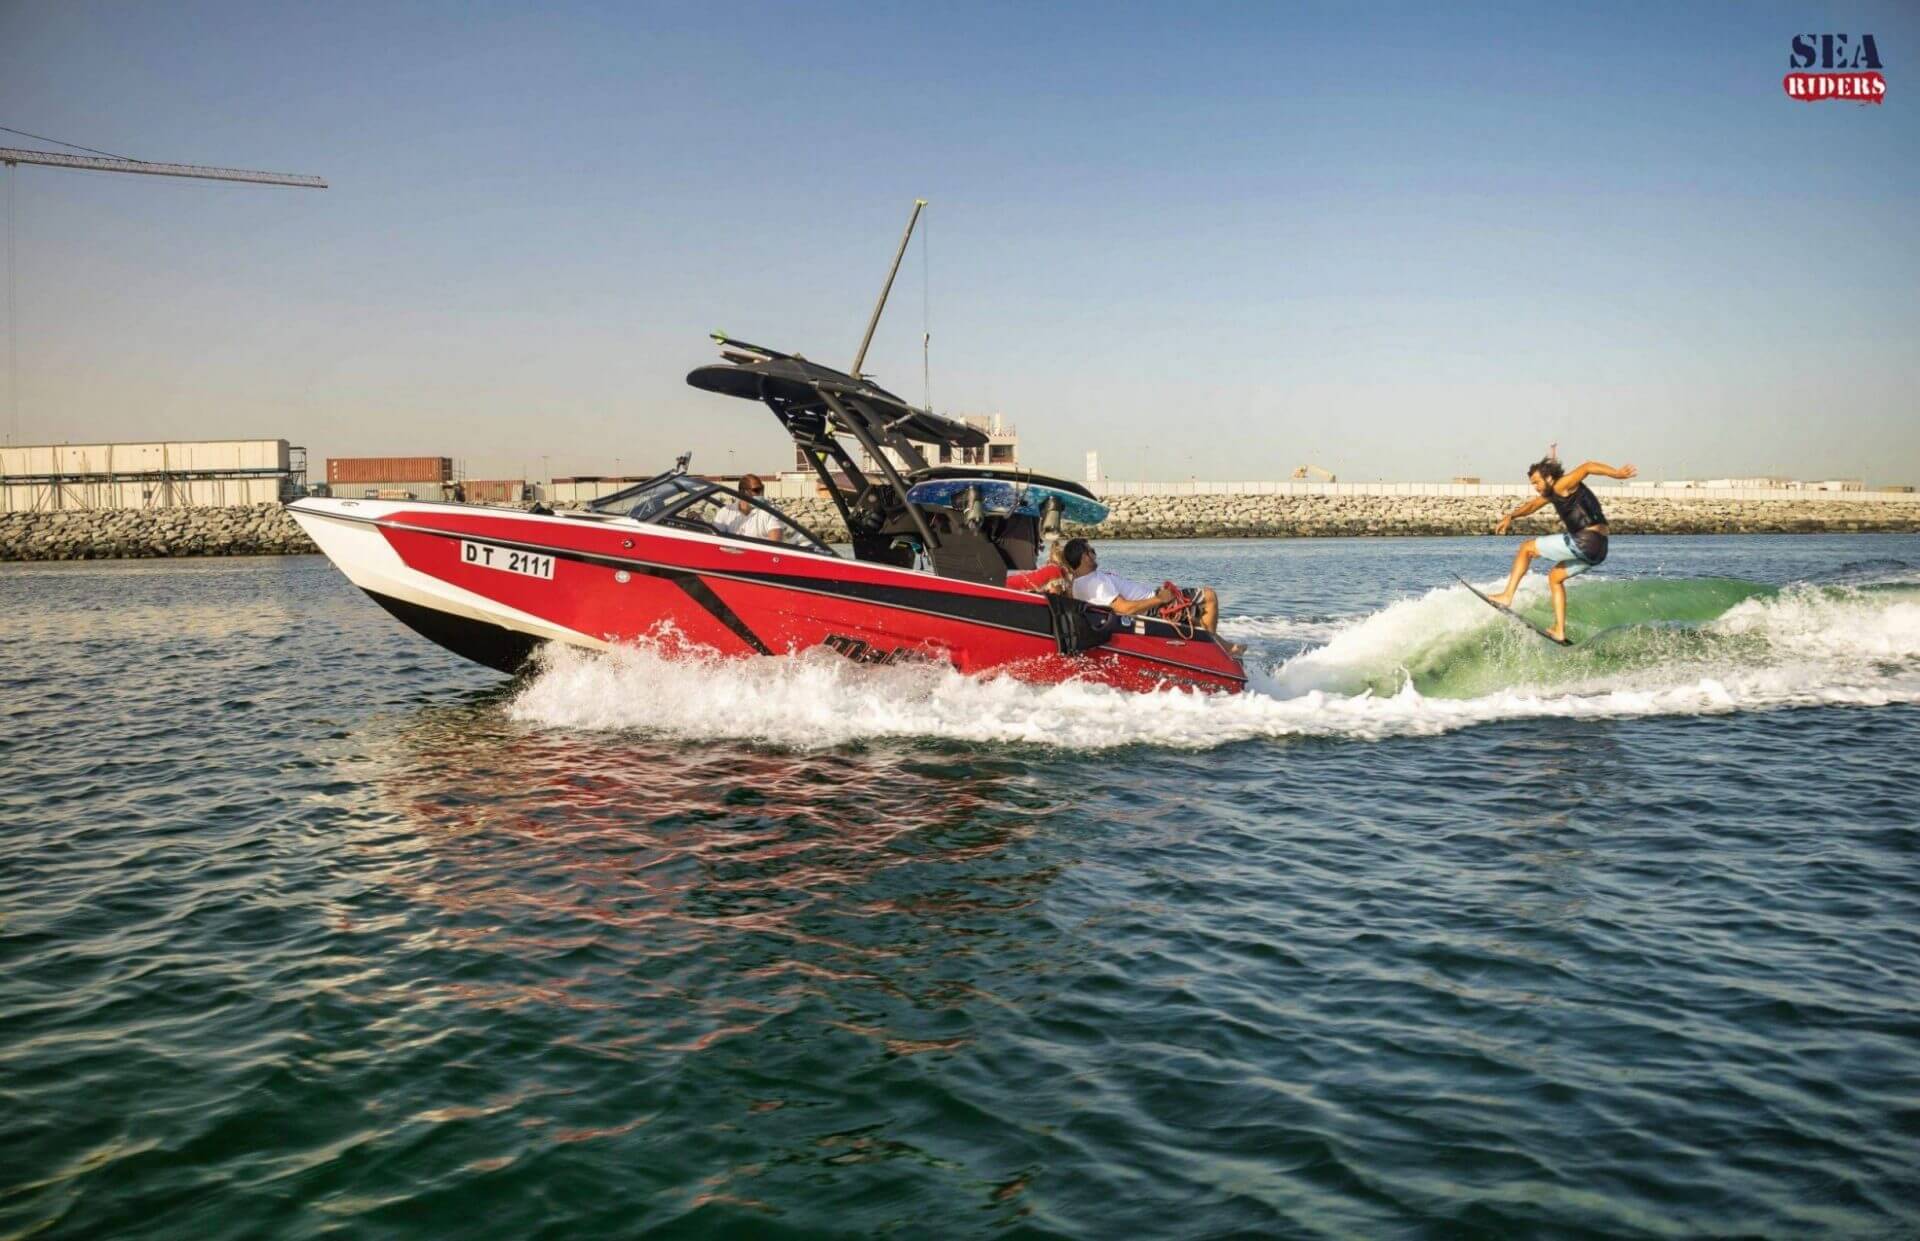 Sea Riders - Dubai Marina